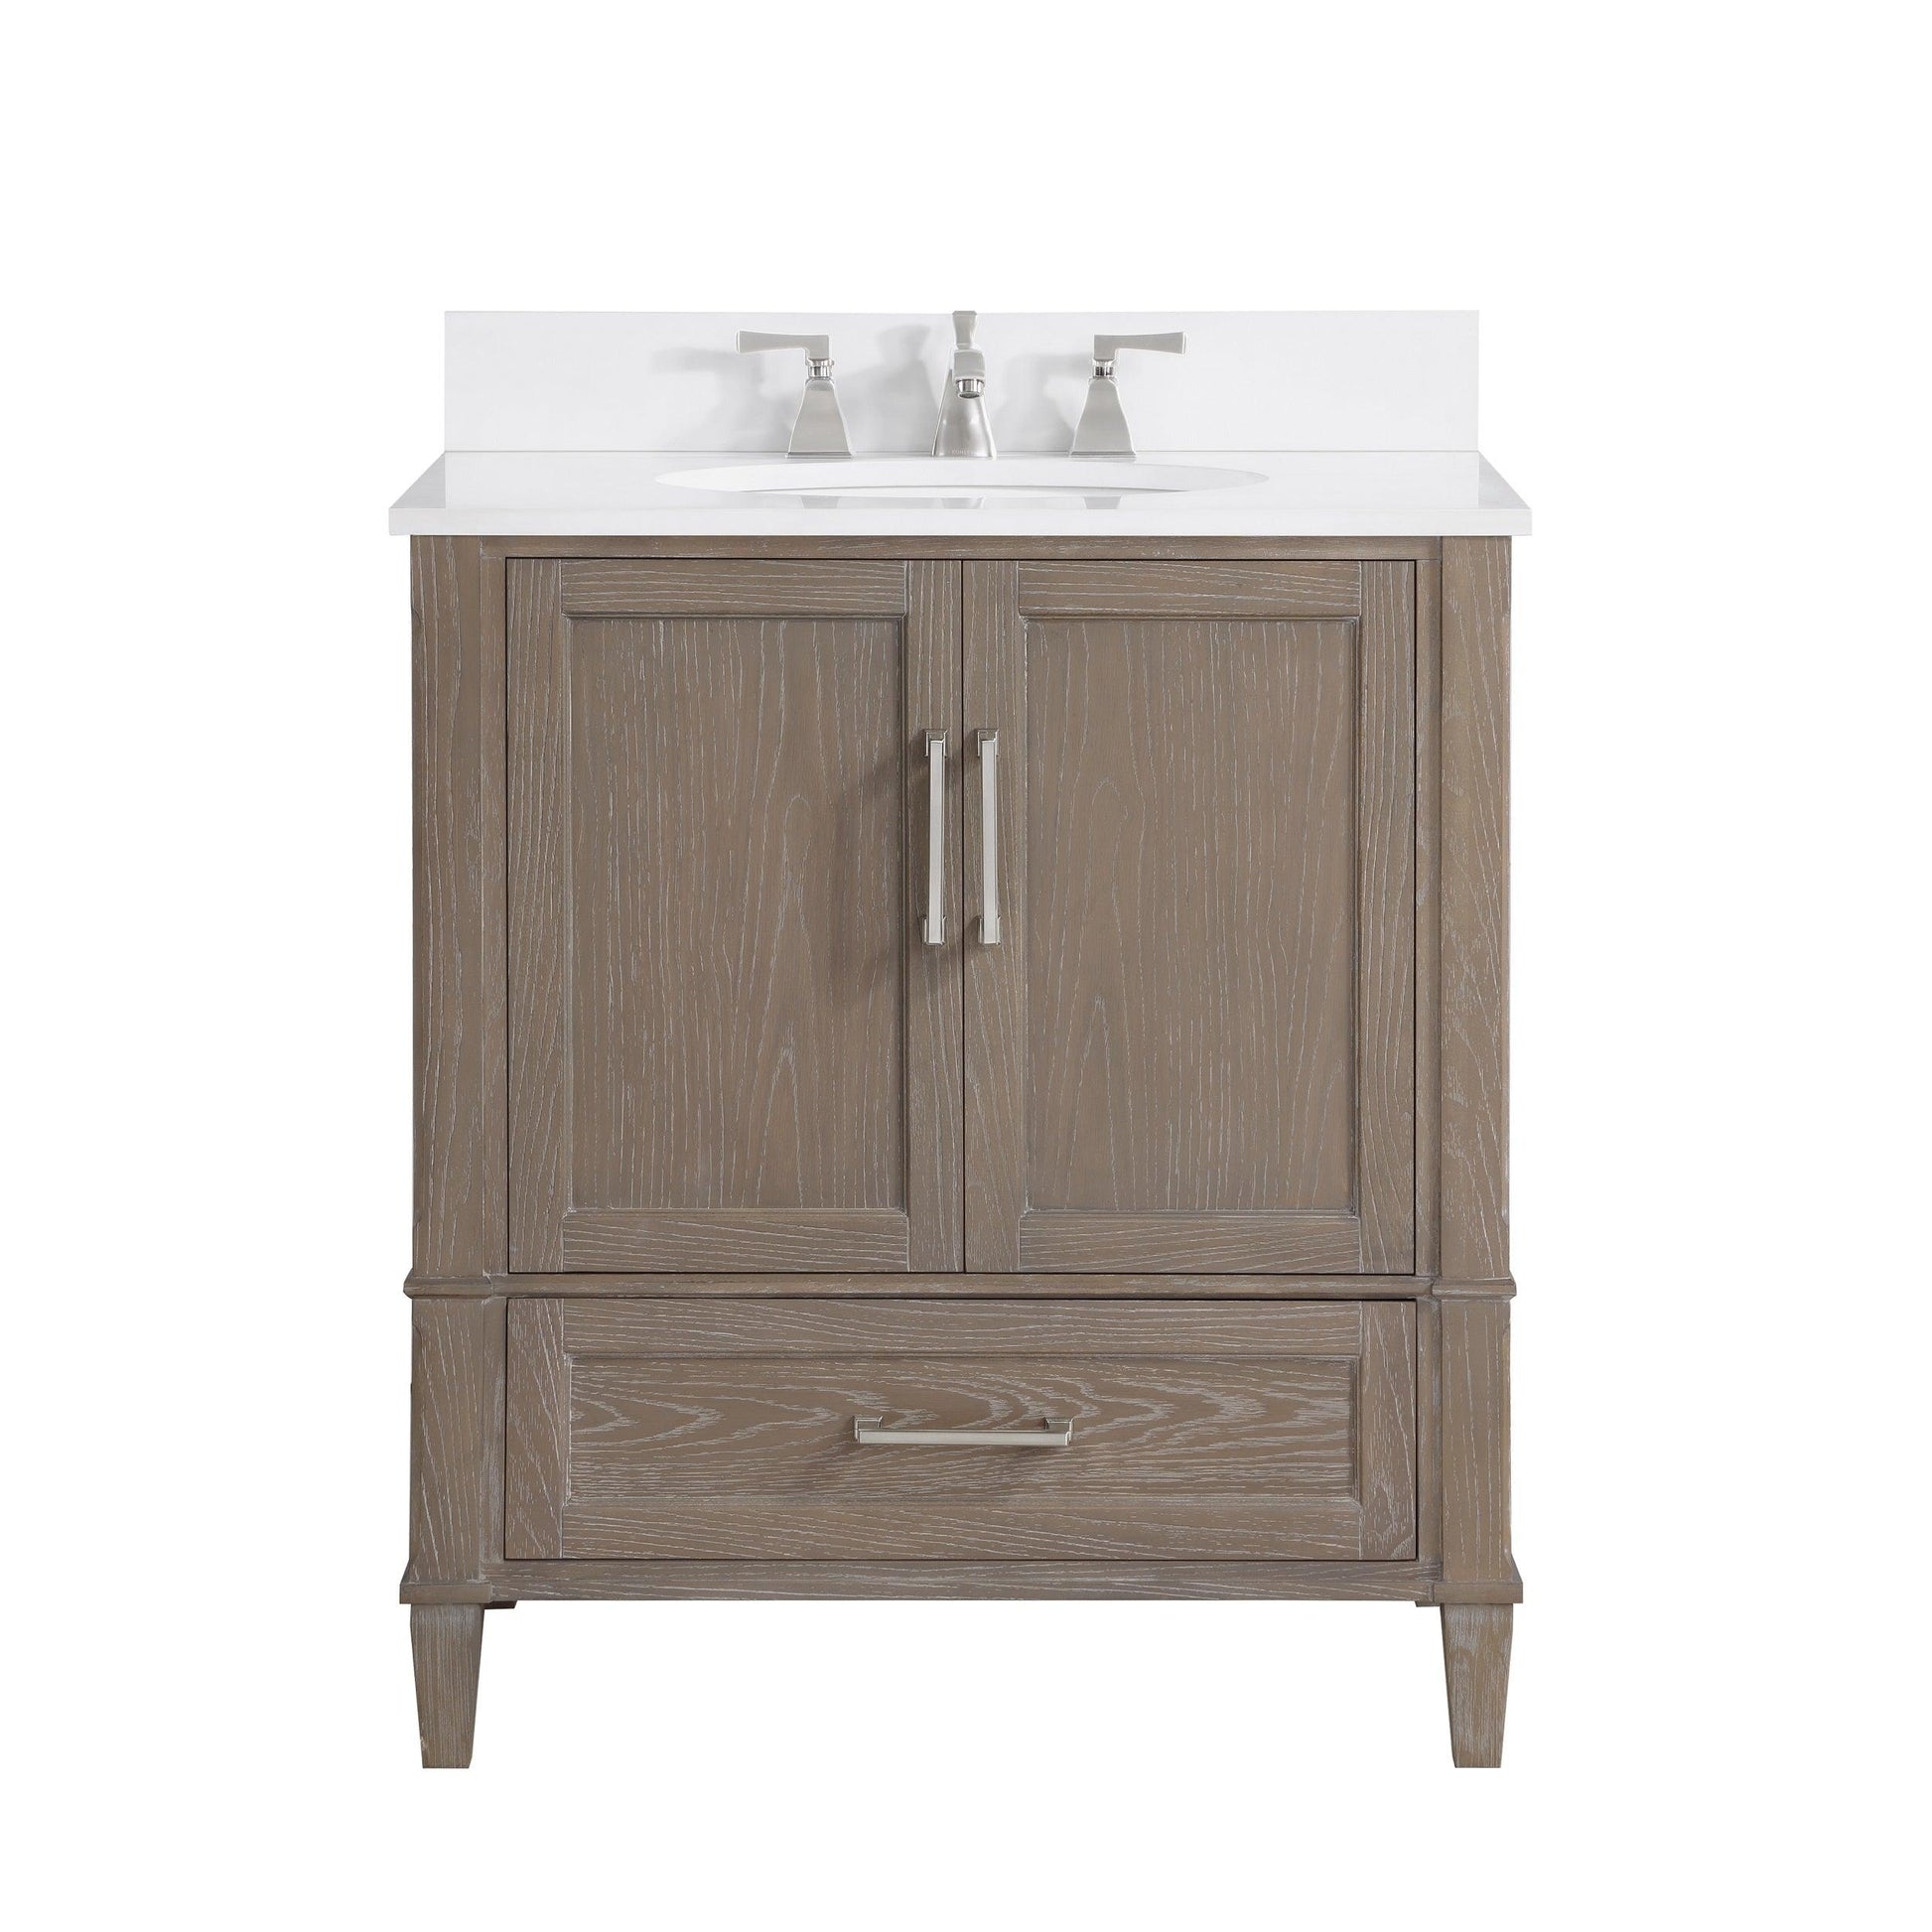 BEMMA Design Montauk Single Bathroom Vanity Set with White Quartz or Carrara Marble Top - Sea & Stone Bath